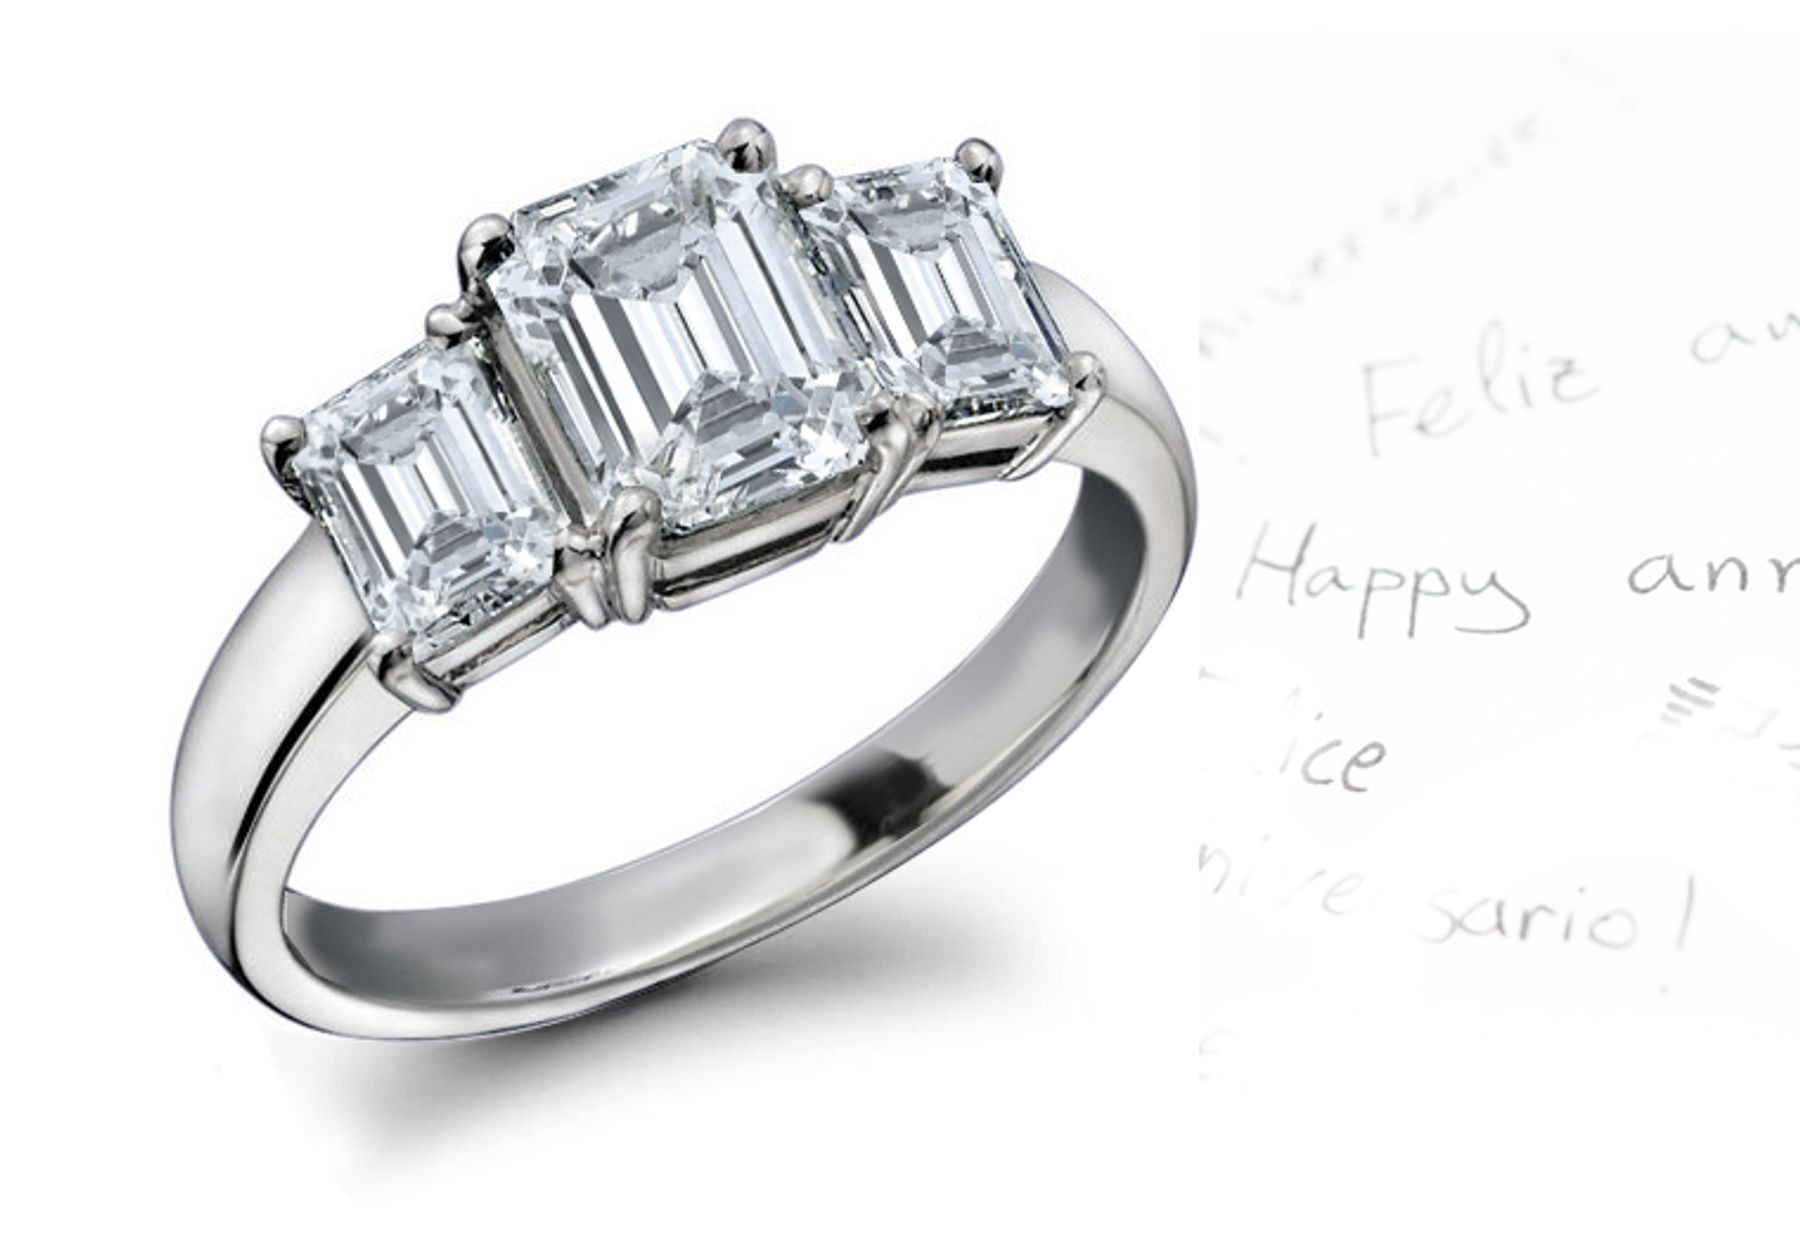 Diamond Anniversary Rings: Three-Stone (Ring with Three Octogon Diamonds) Ring in Platinum & 14K Gold. 